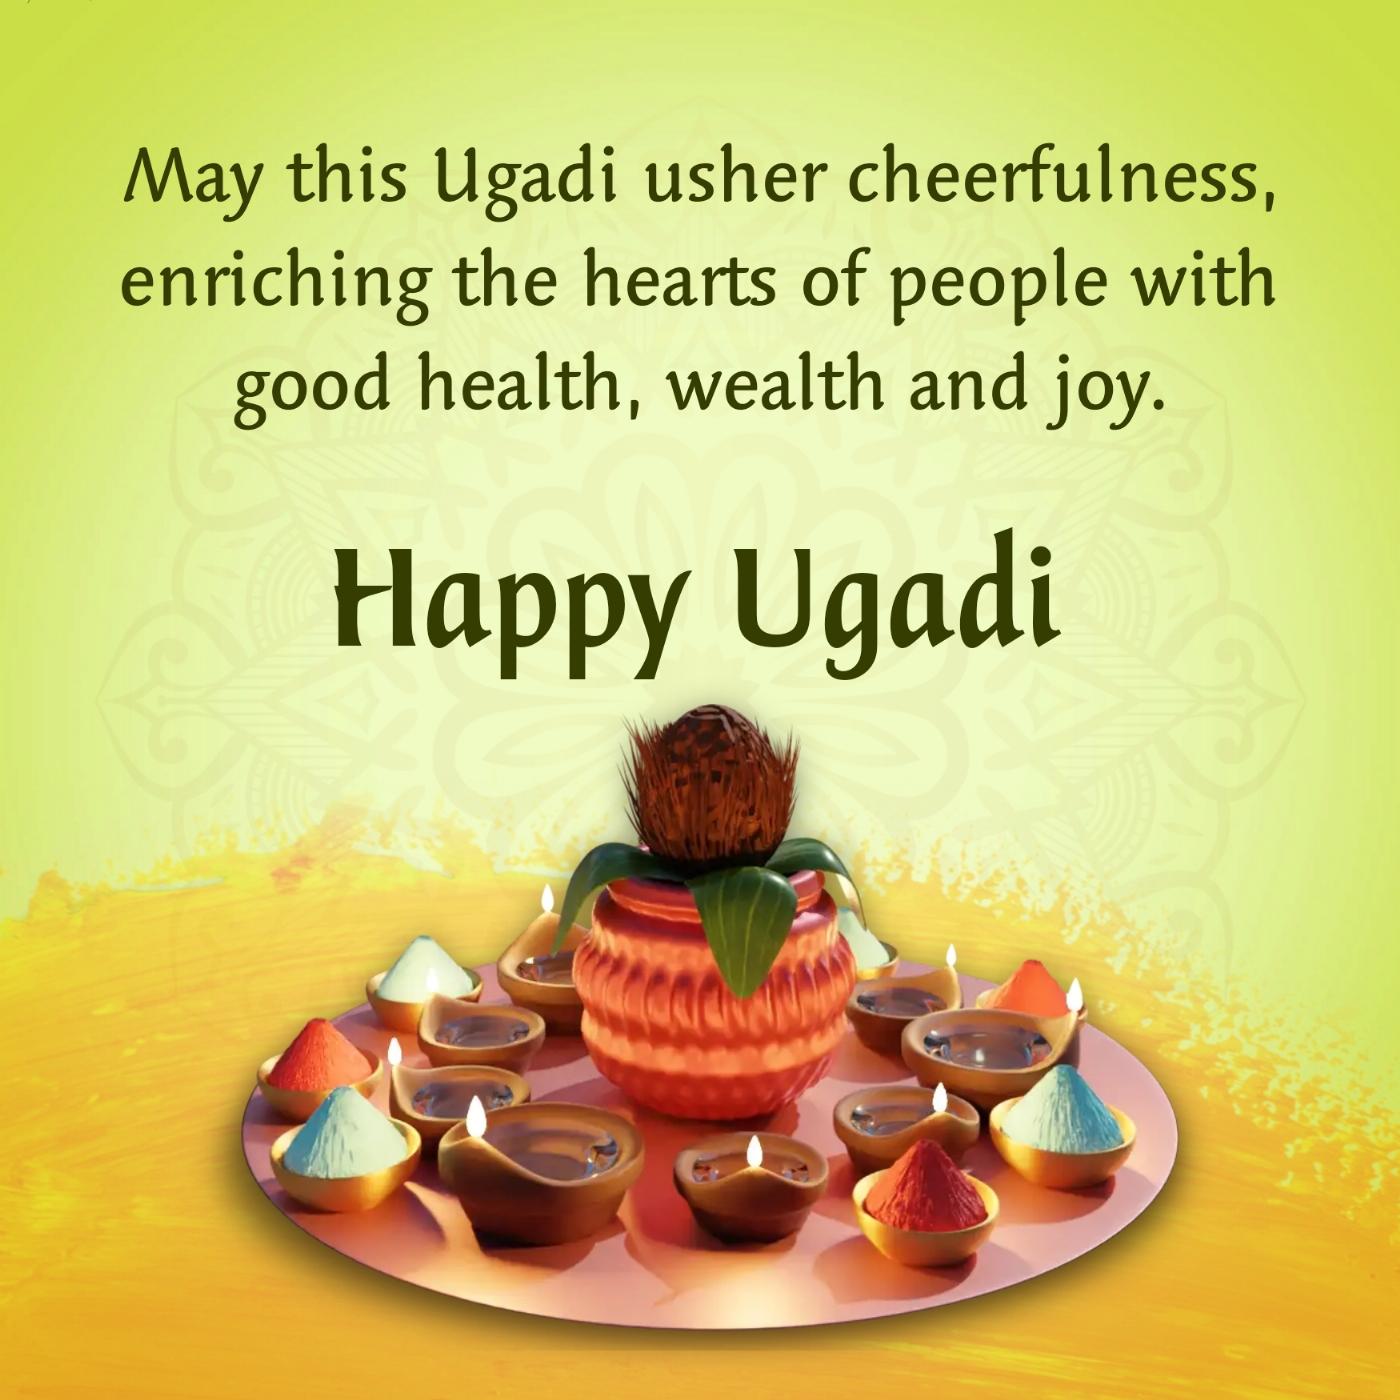 May this Ugadi usher cheerfulness enriching the hearts